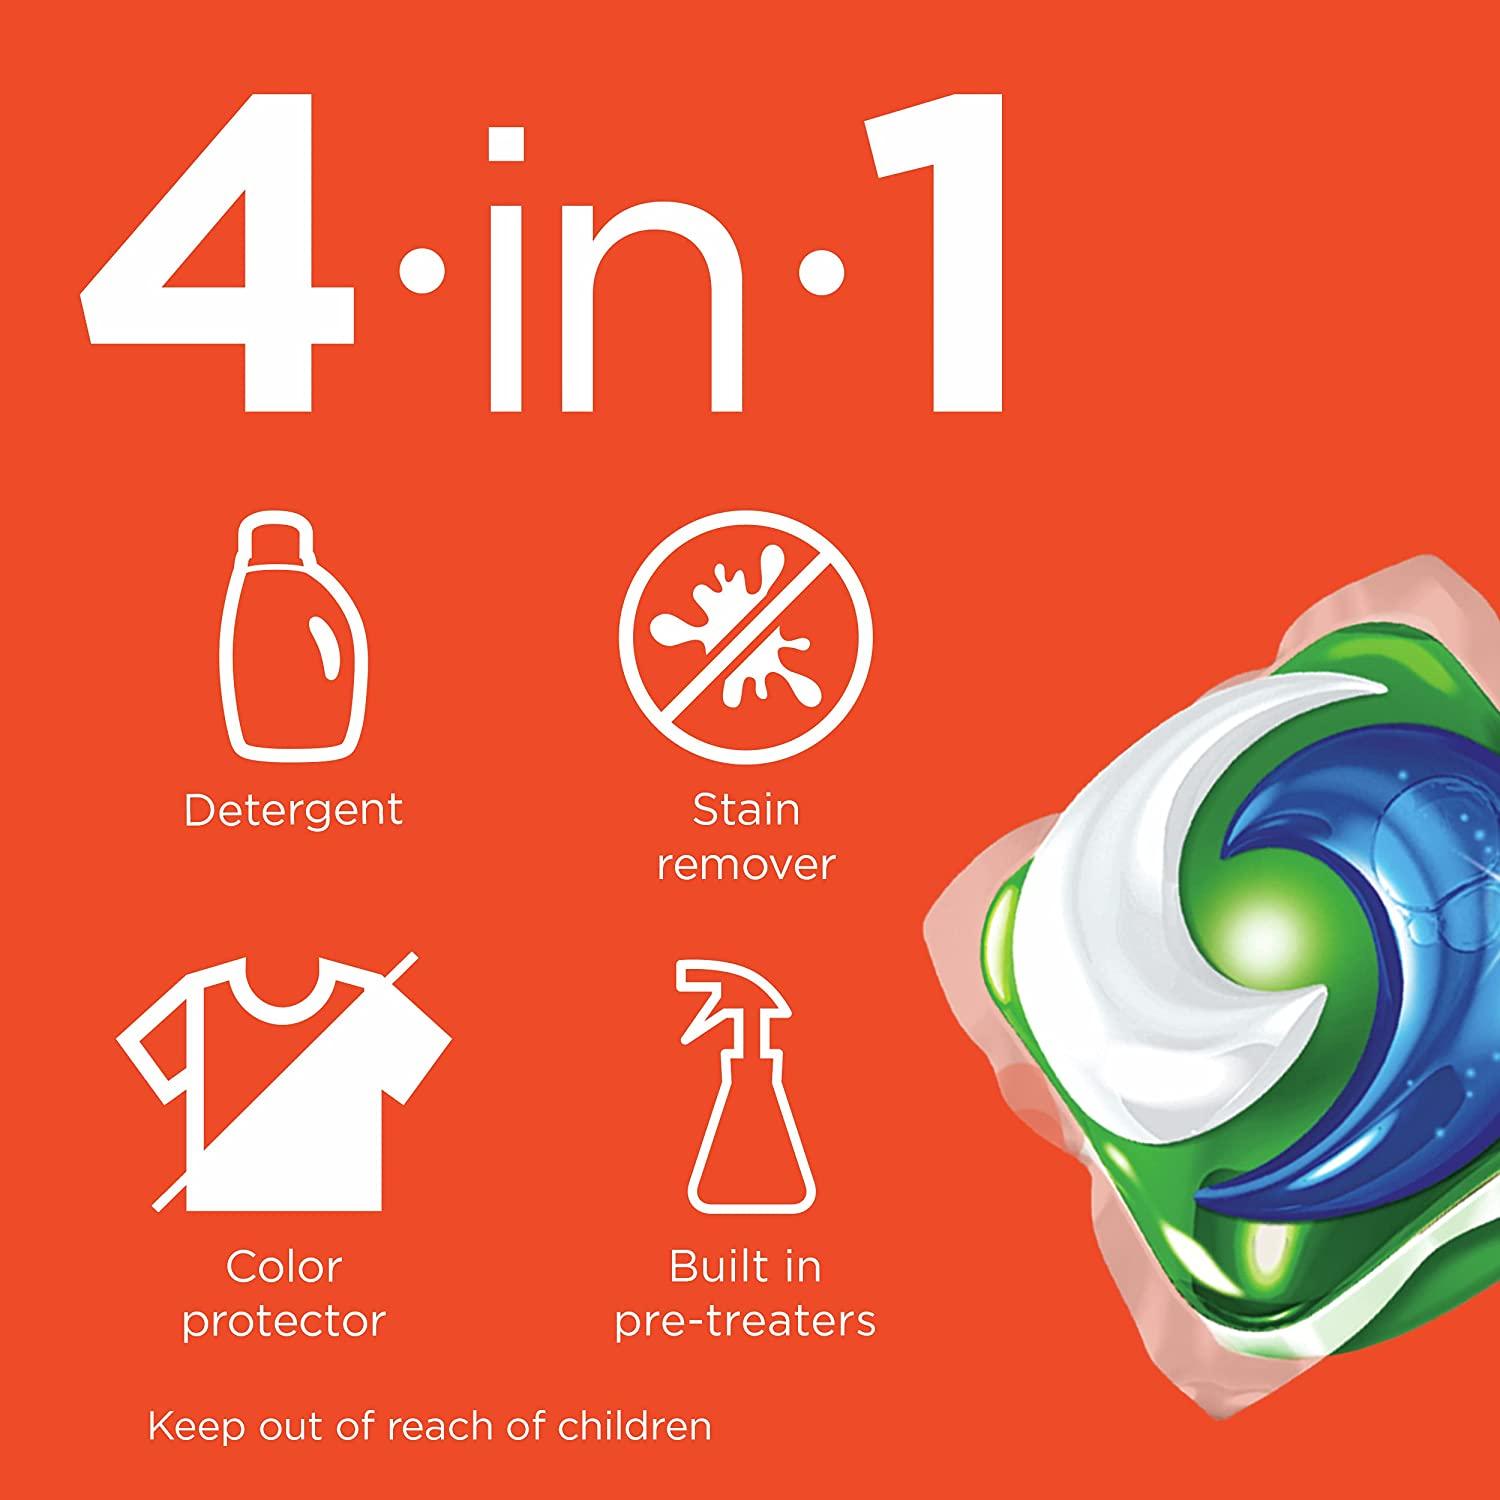 Tide PODS 4 in 1 Febreze Sport Odor Defense, Laundry Detergent Soap PODS,  High Efficiency (HE), 61 Count